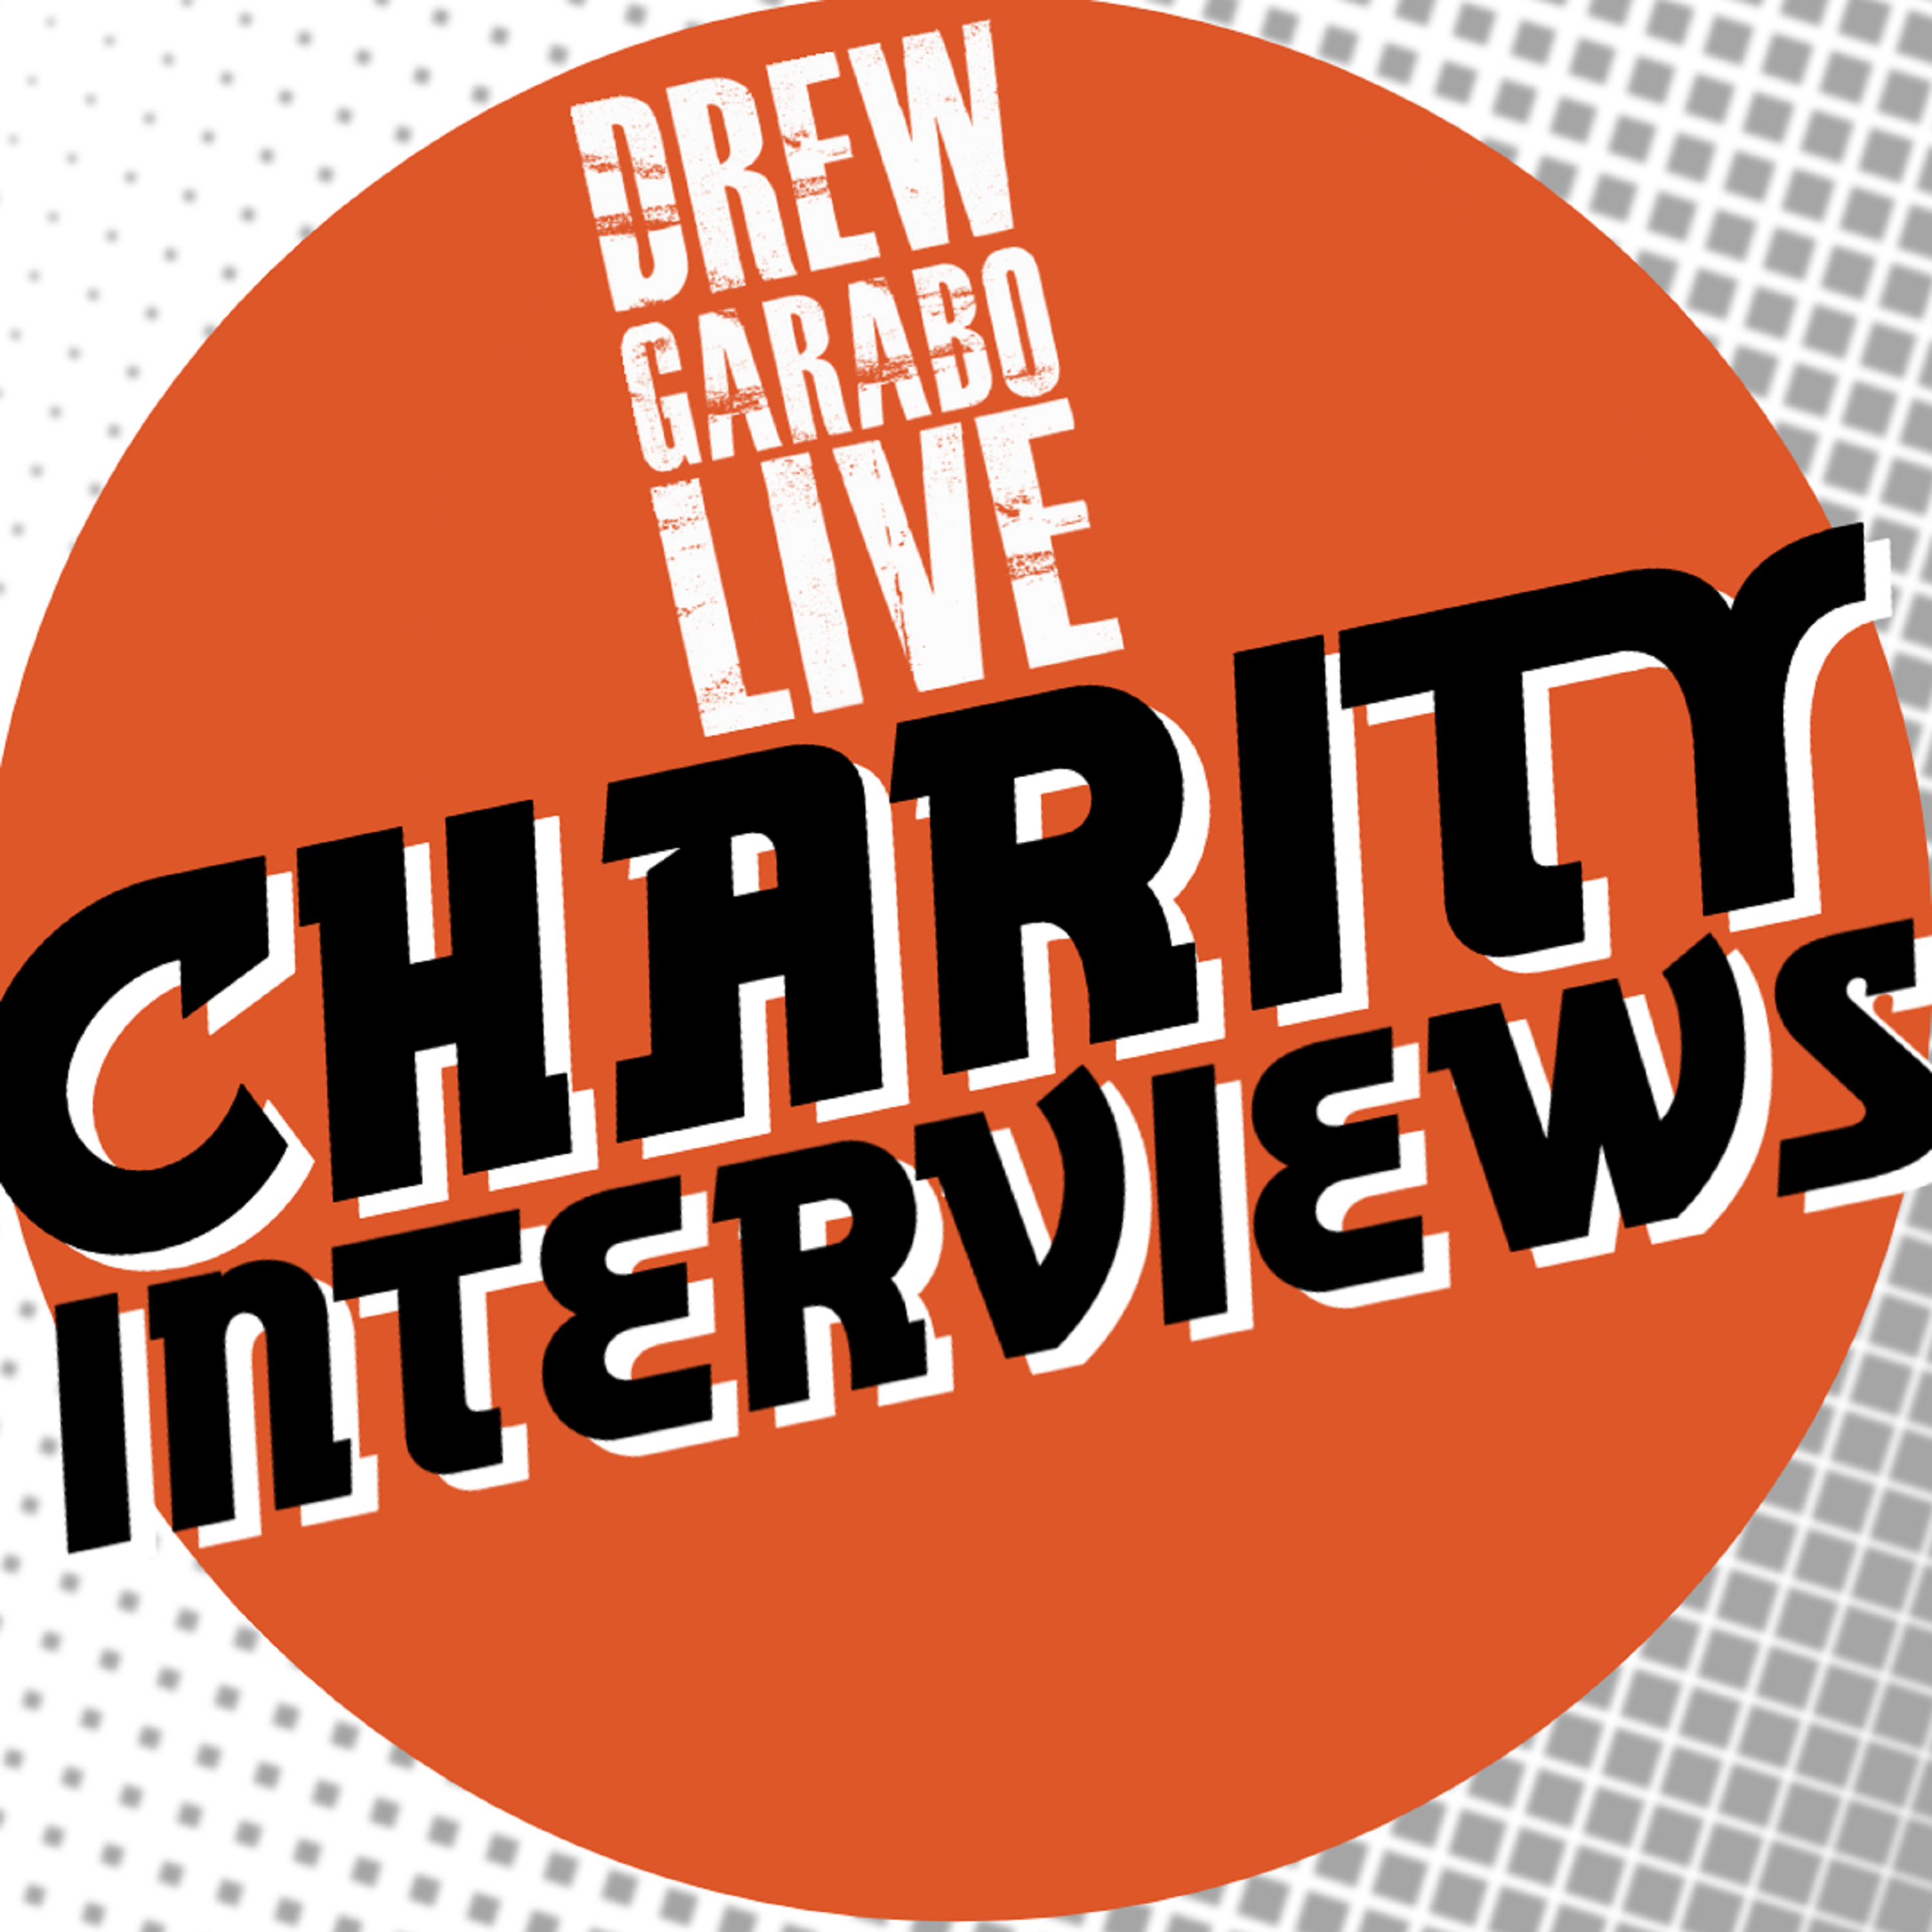 Drew Garabo Live Charity Interviews